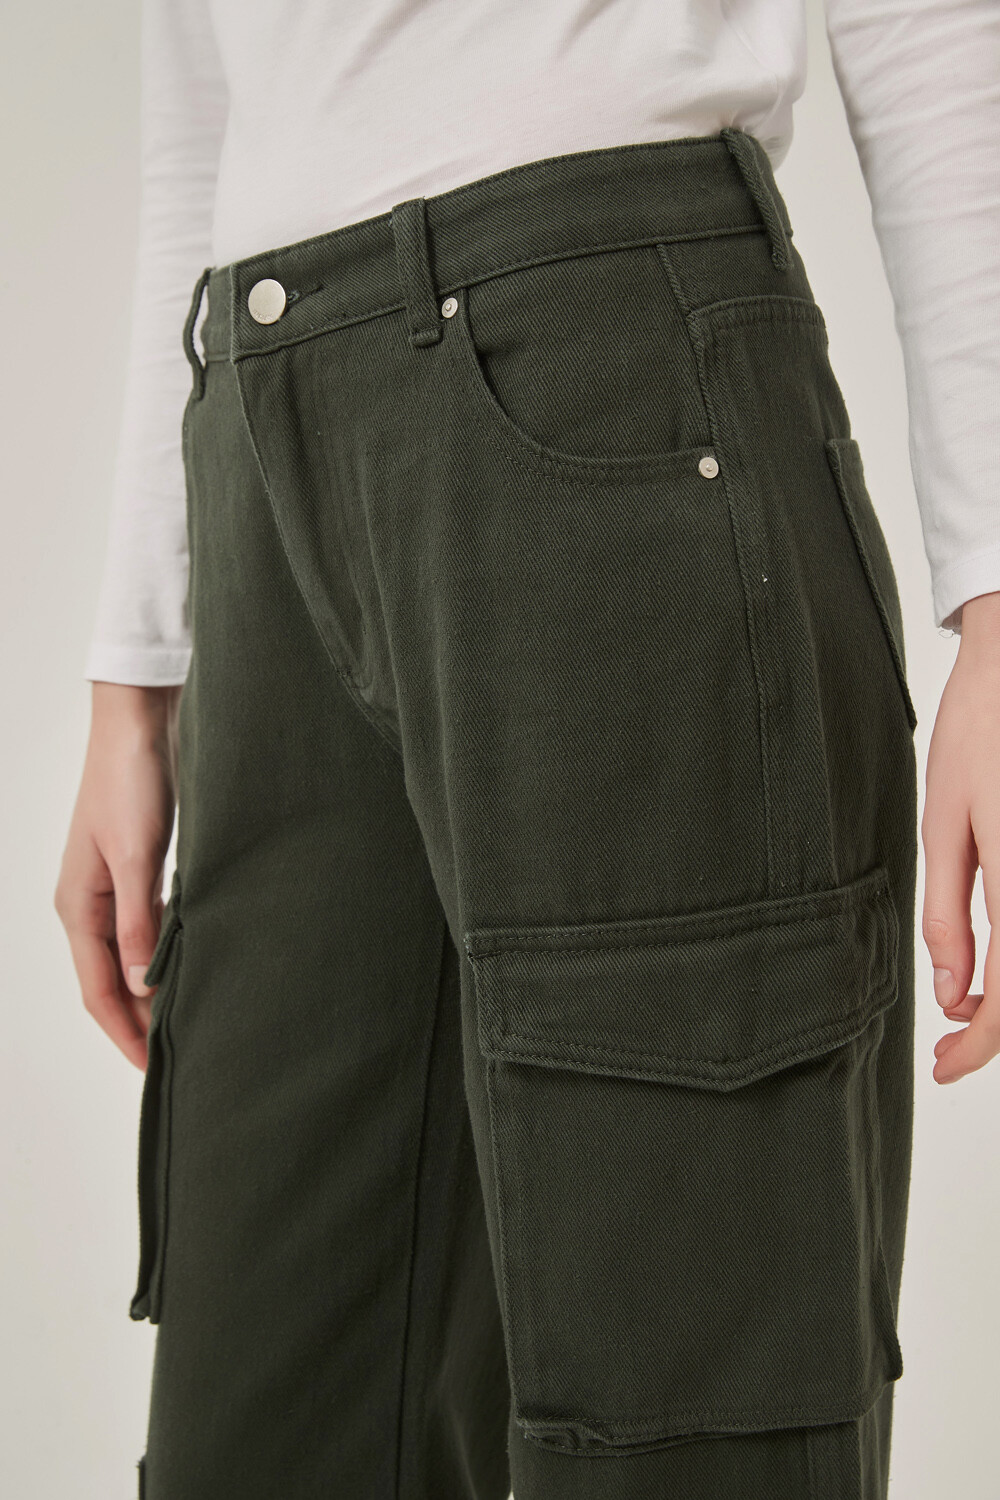 Pantalon Womali Verde Ingles